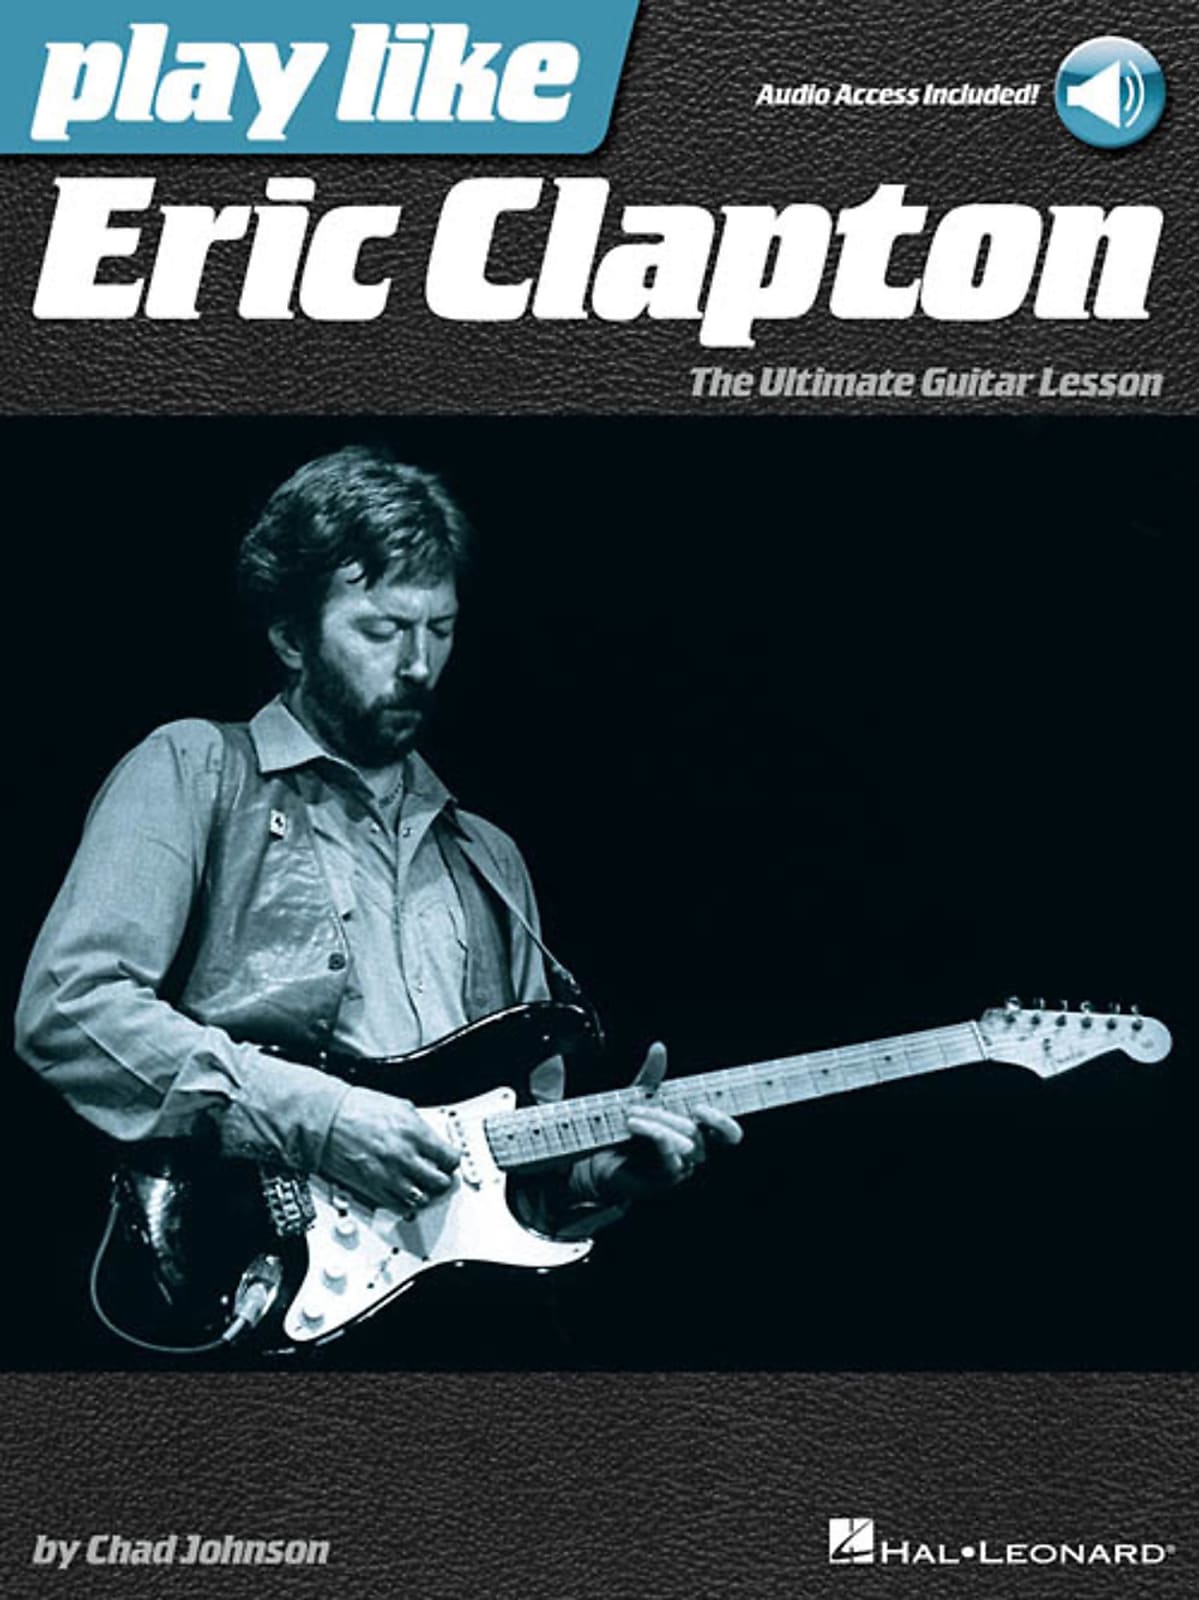 Hal Leonard Play like Eric Clapton The Ultimate Guitar Lesson